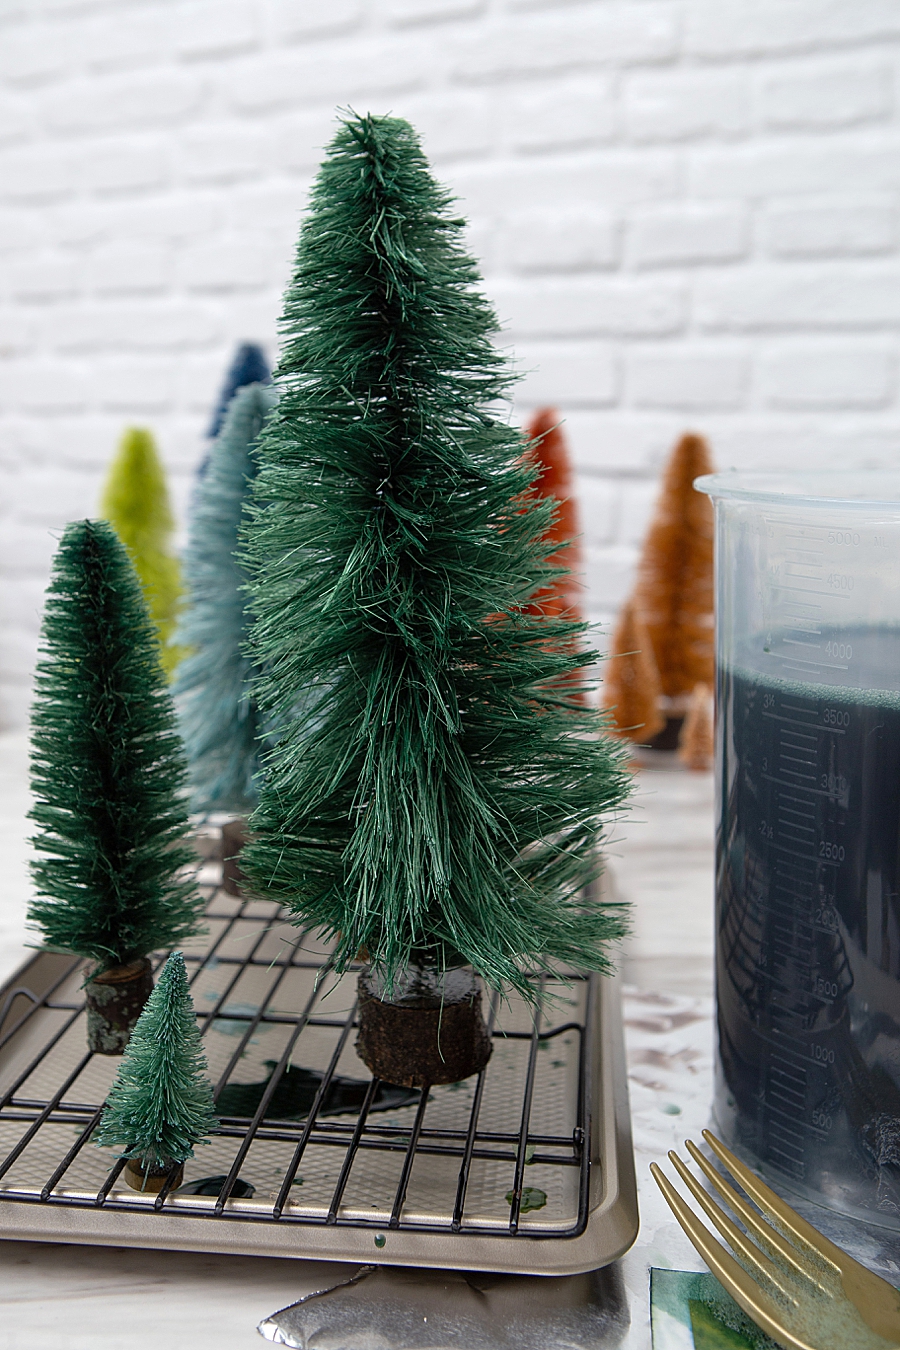 How to easily dip-dye your own bottle brush trees!